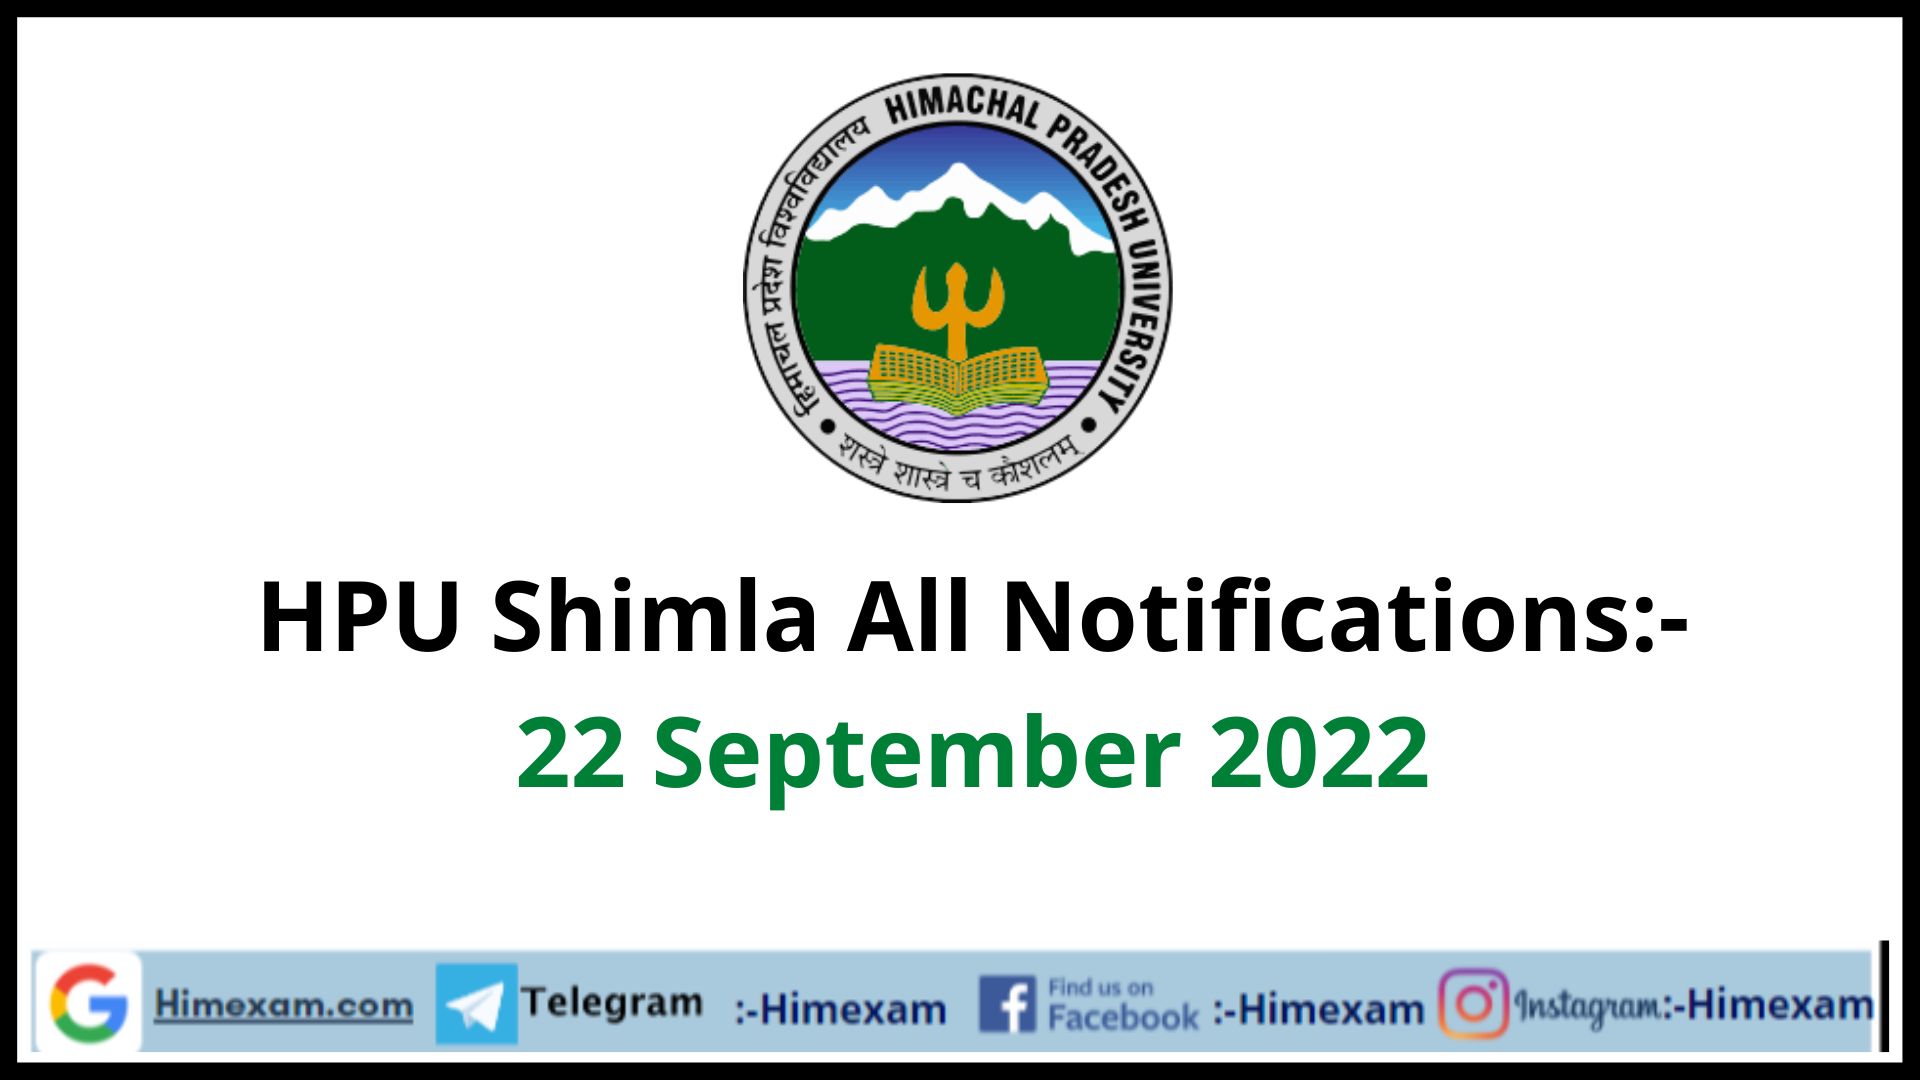 HPU Shimla All Notifications:- 22 September 2022